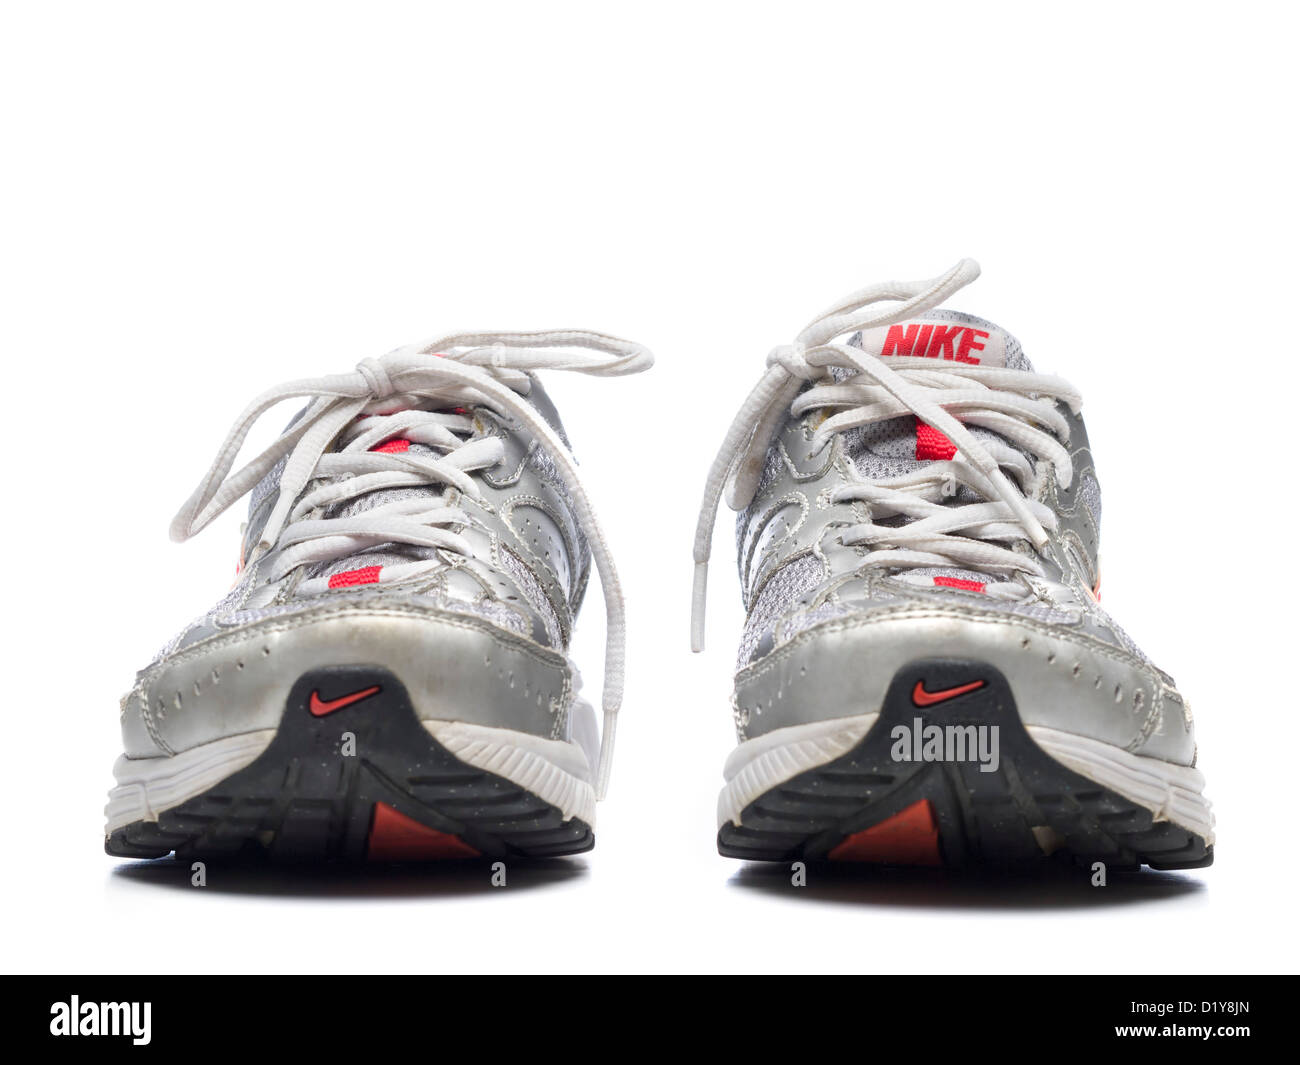 Nike graue turnschuhe -Fotos und -Bildmaterial in hoher Auflösung – Alamy